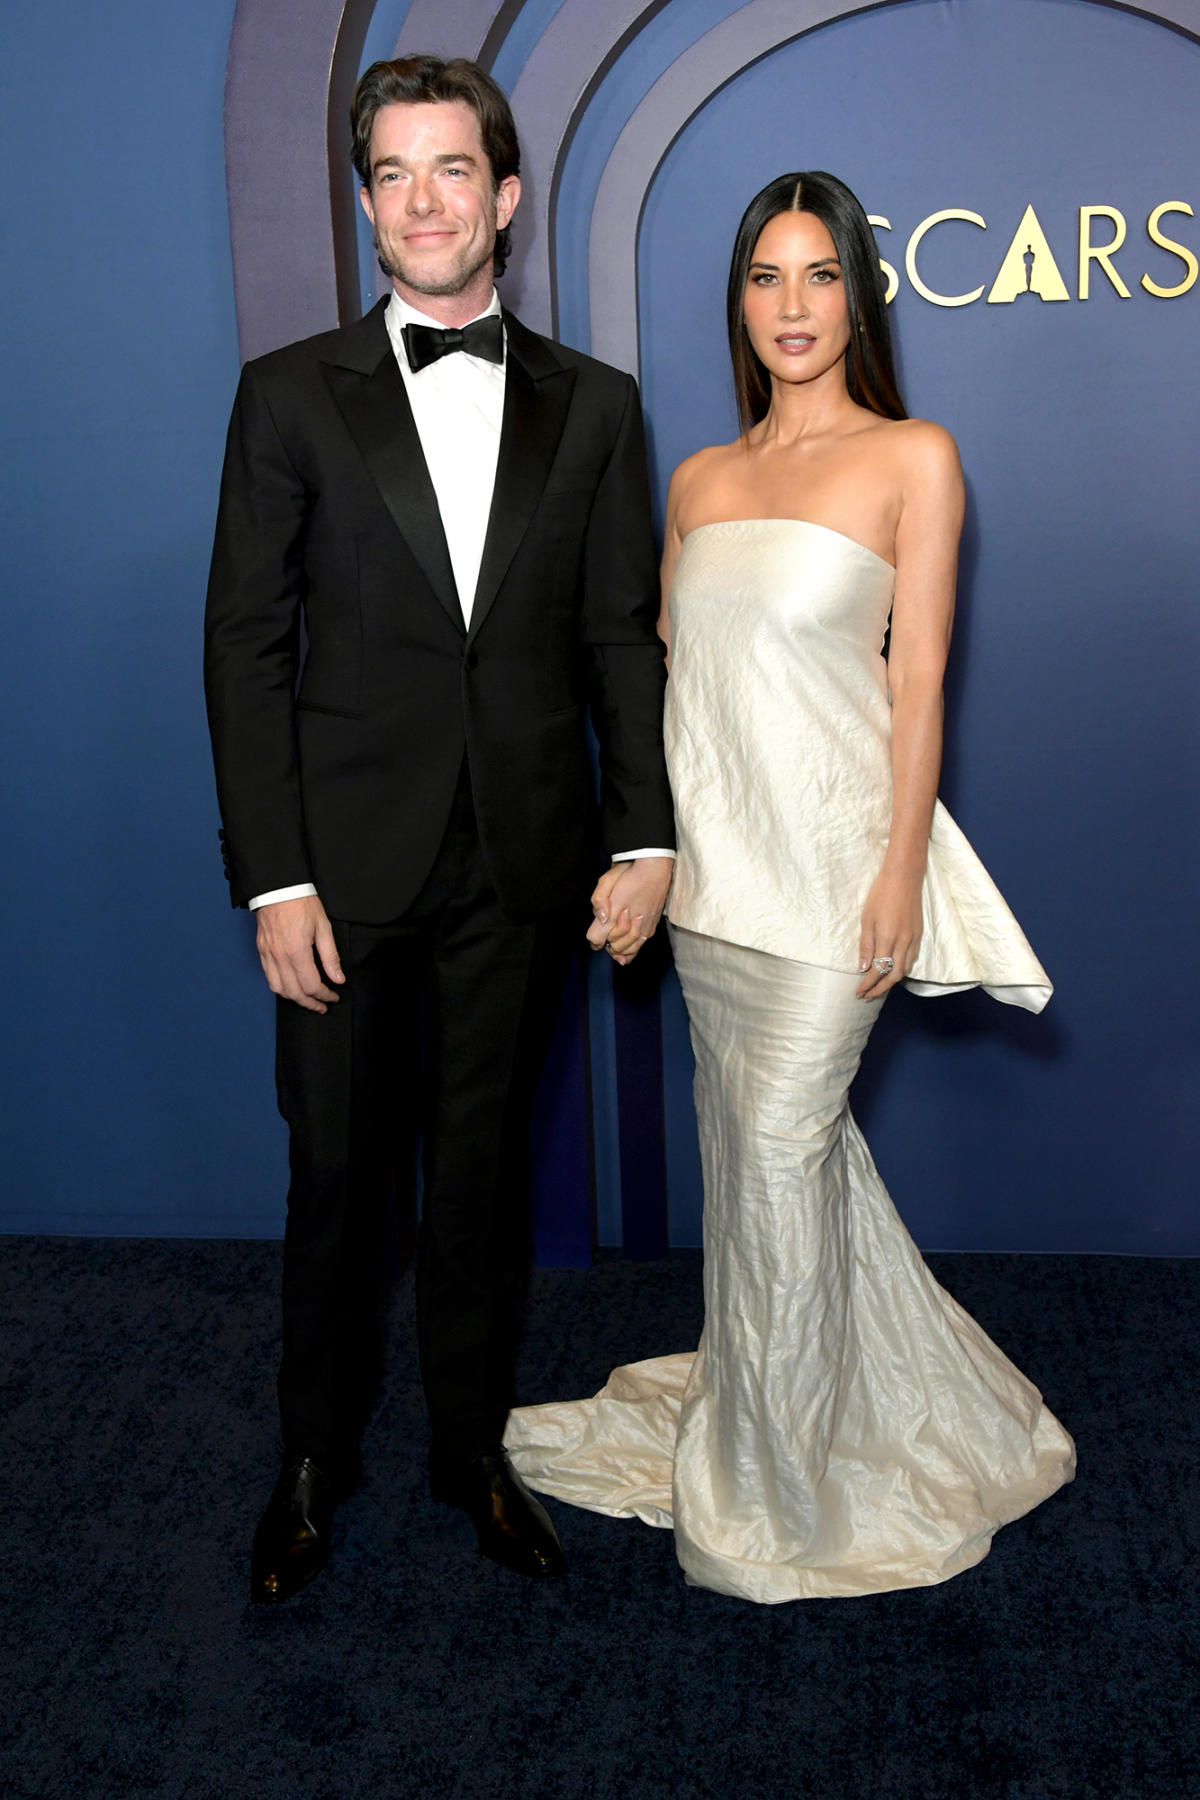 John Mulaney and Olivia Munn Make Their Red Carpet Debut as a Couple at